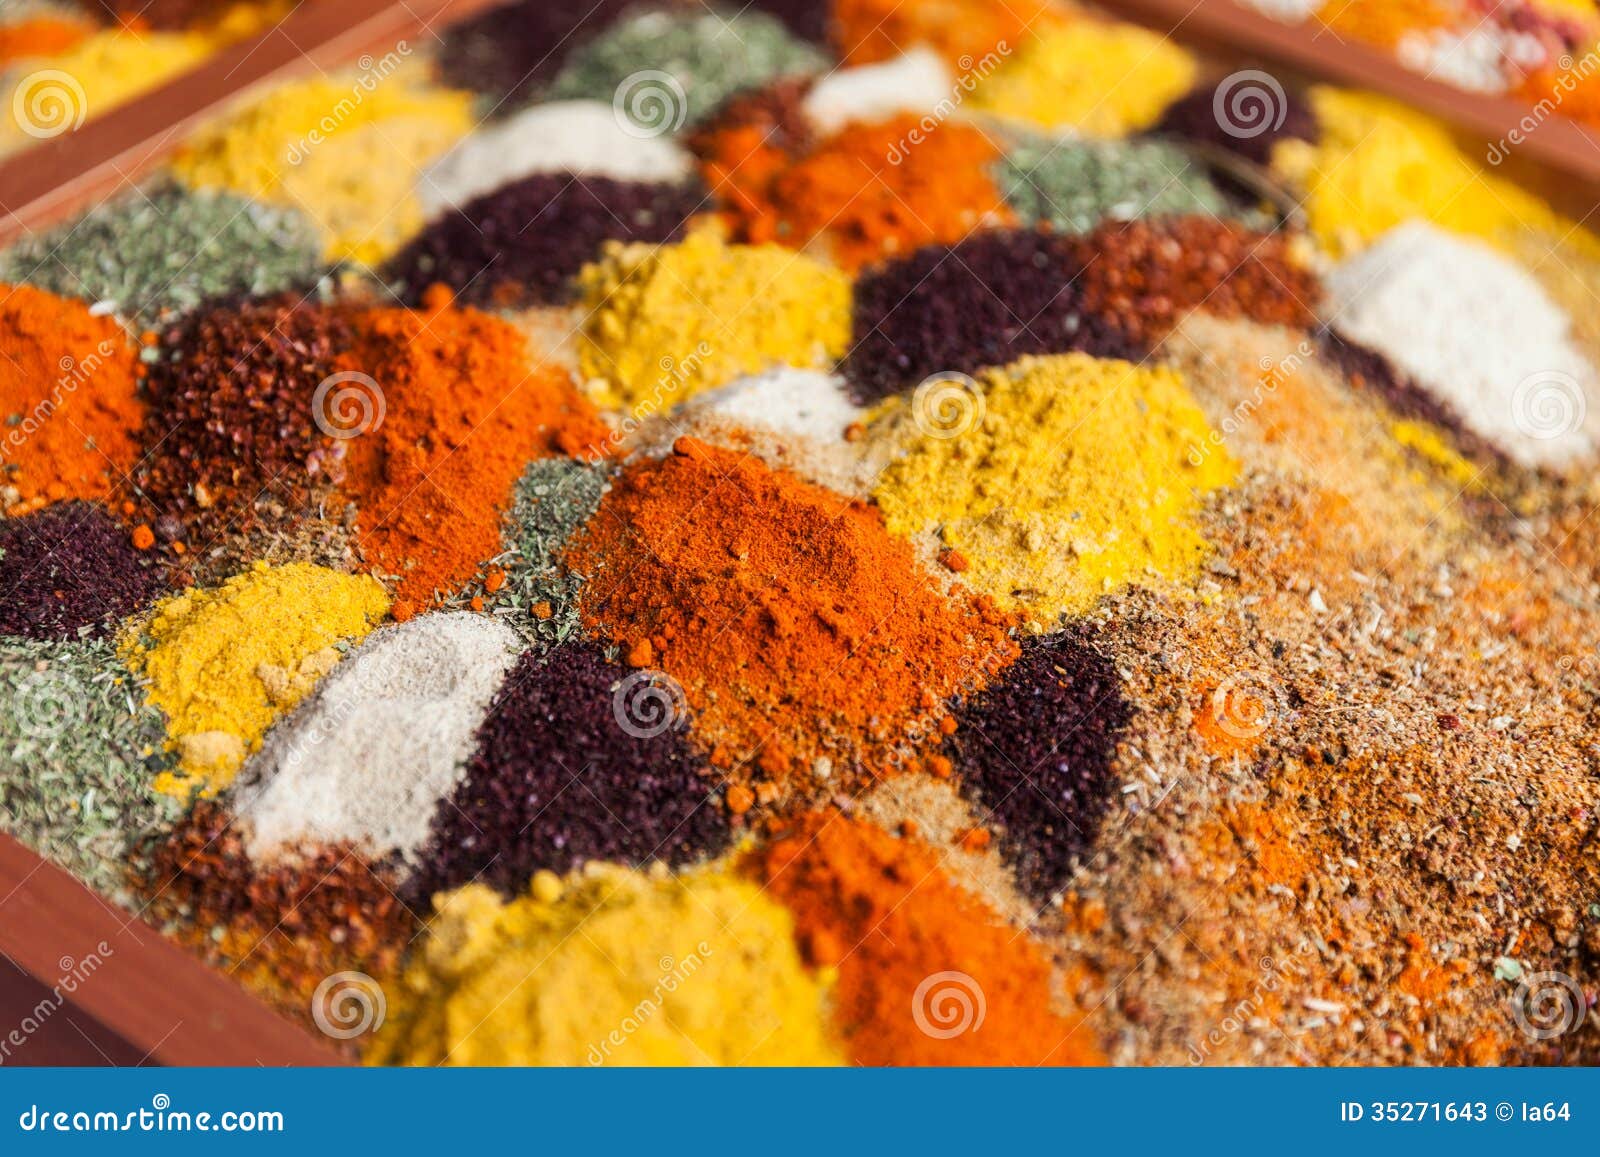 pepper powder herbal spice condiment ingredients at food market